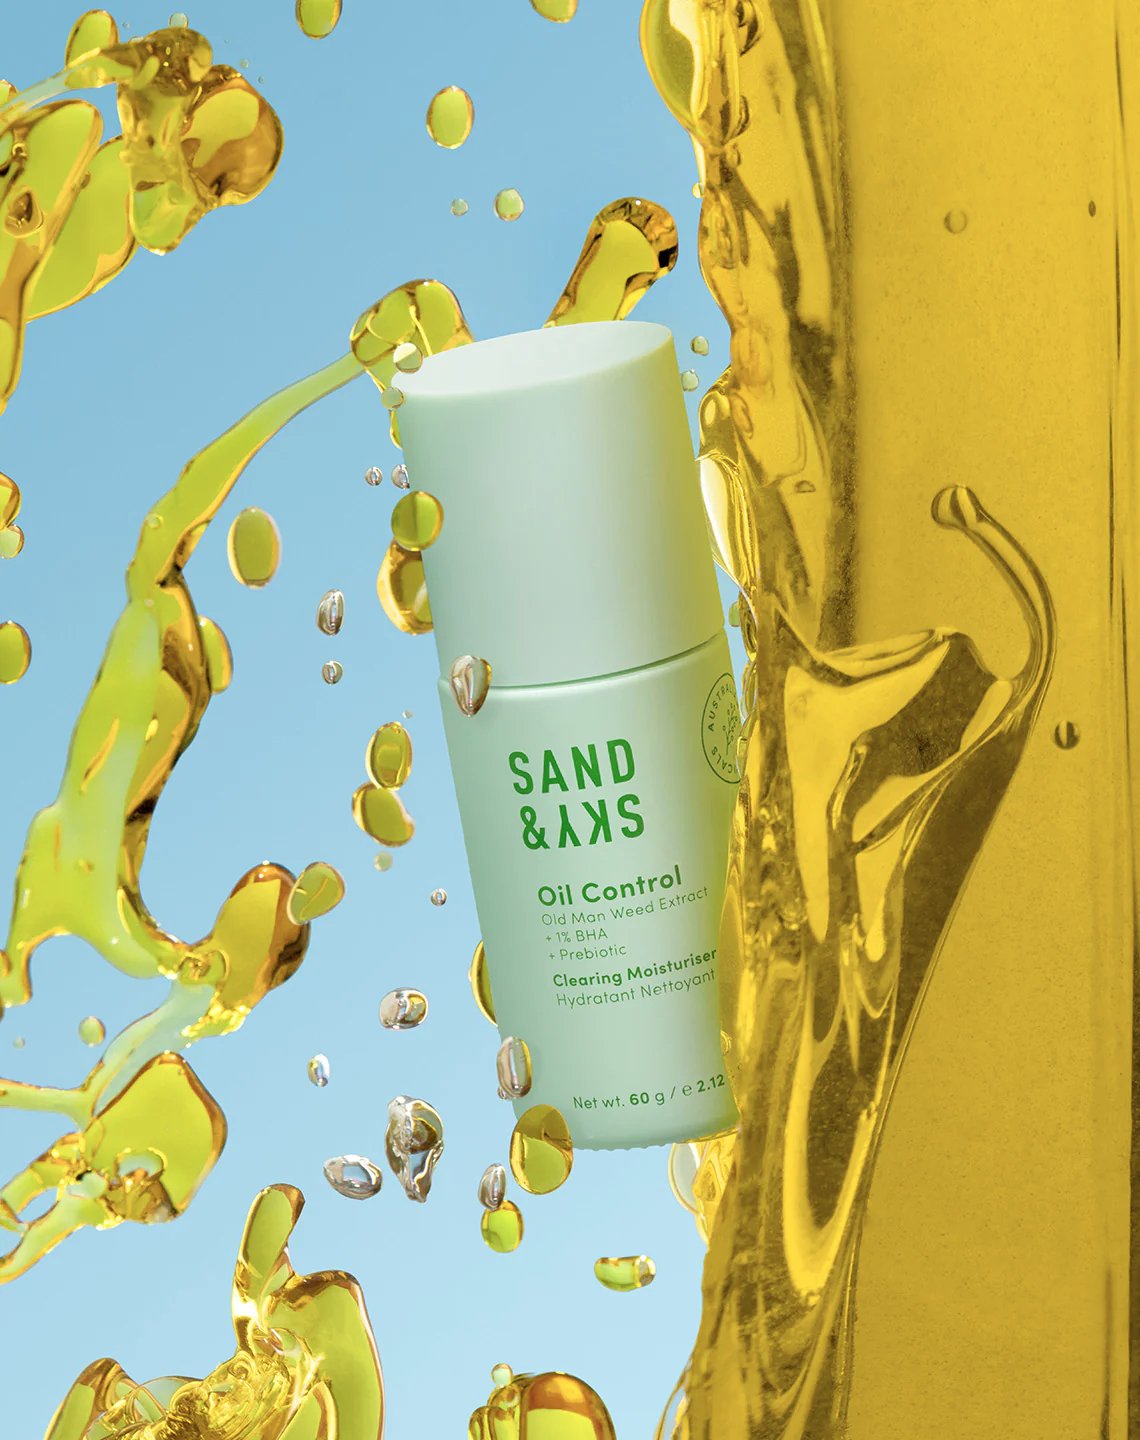 Sand & Sky Oil Control Clearing Moisturiser